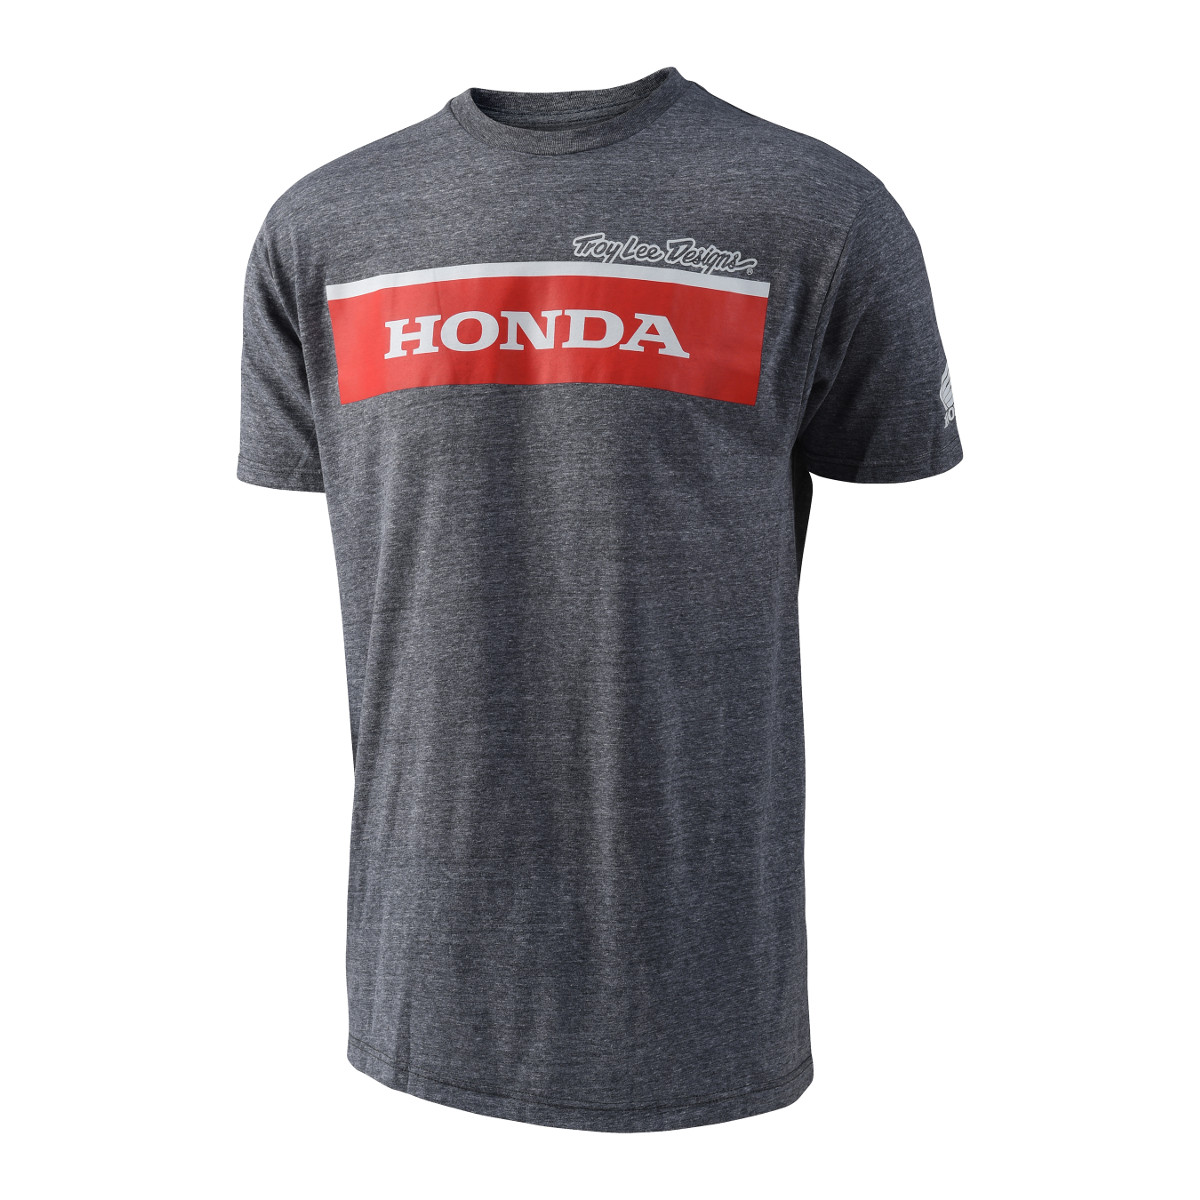 Troy Lee Designs T-Shirt Honda Wing Block Grey